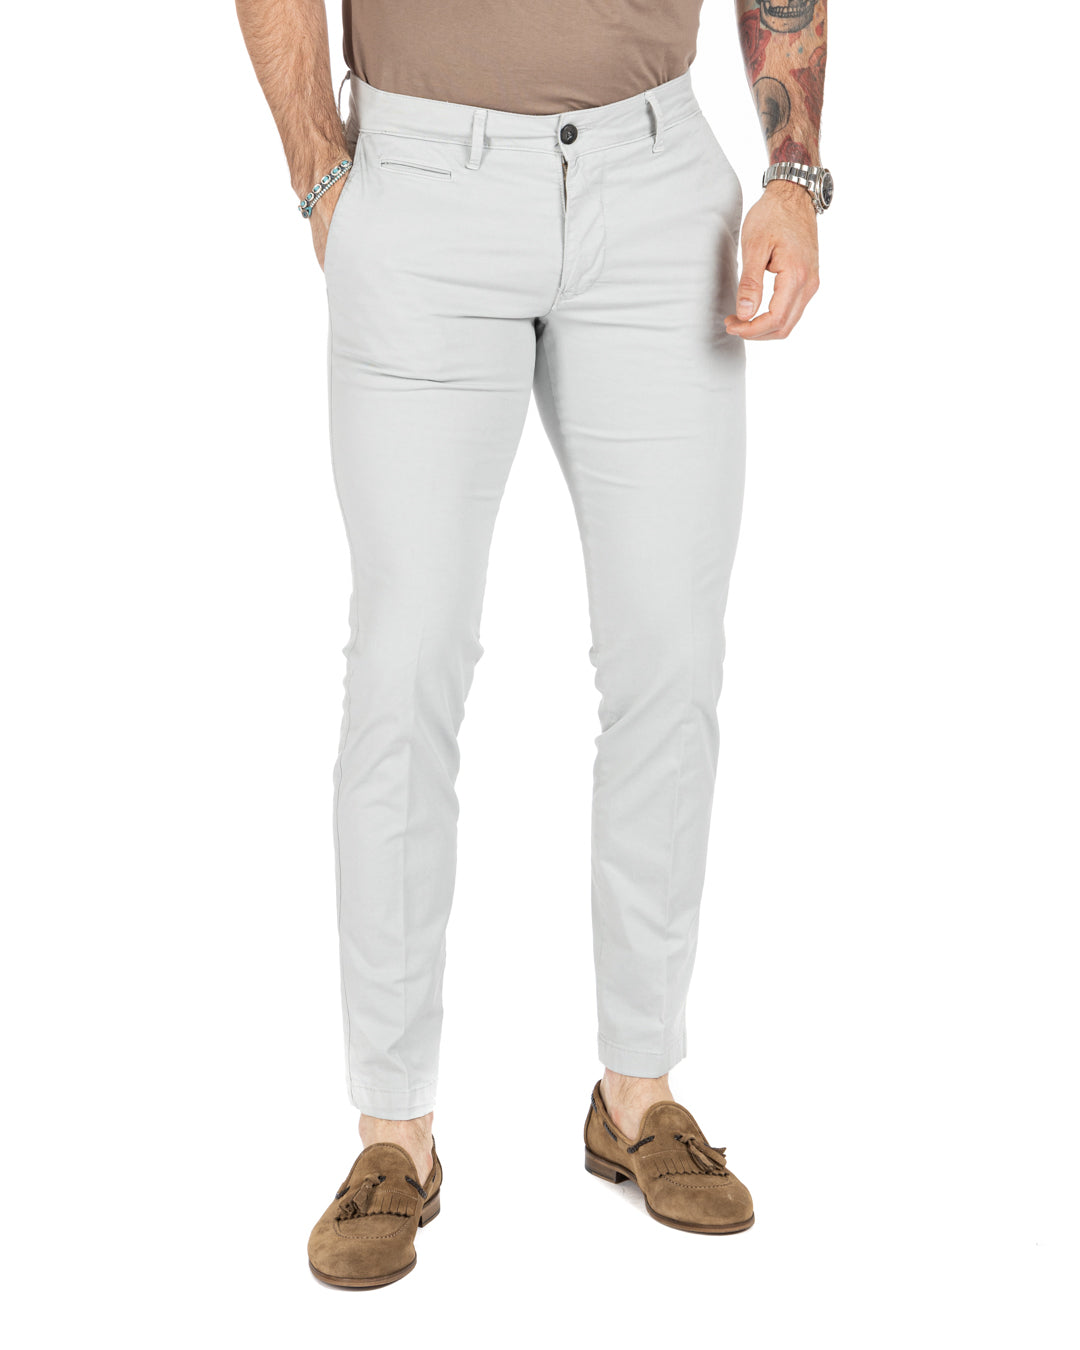 Frank - gray basic trousers 